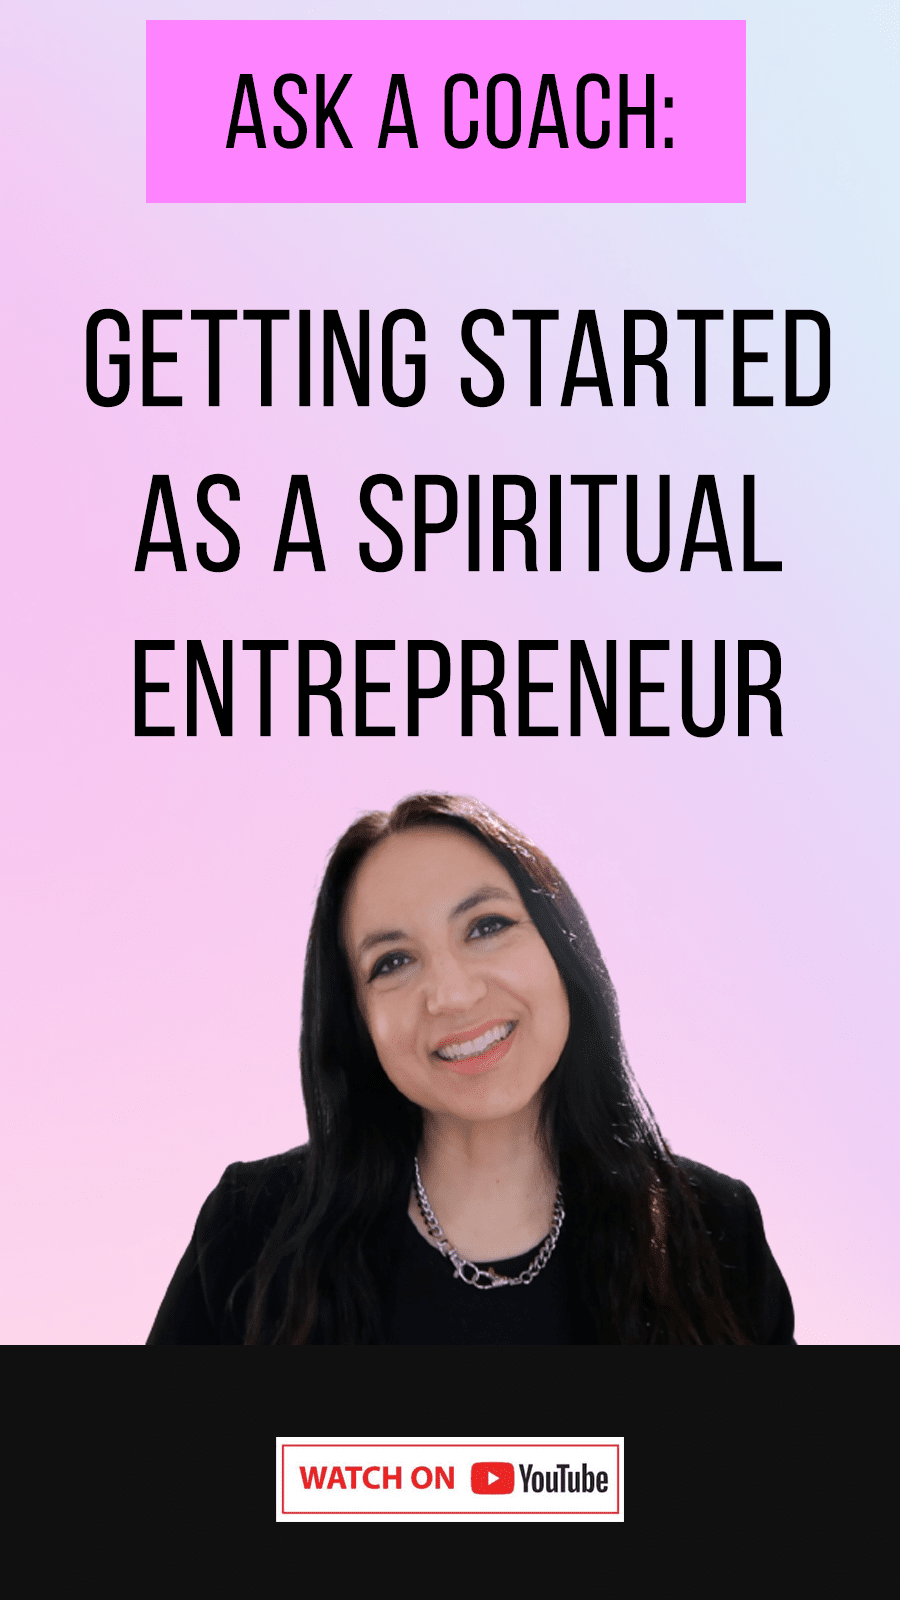 Jenn Stevens with text Getting Started As A Spiritual Entrepreneur